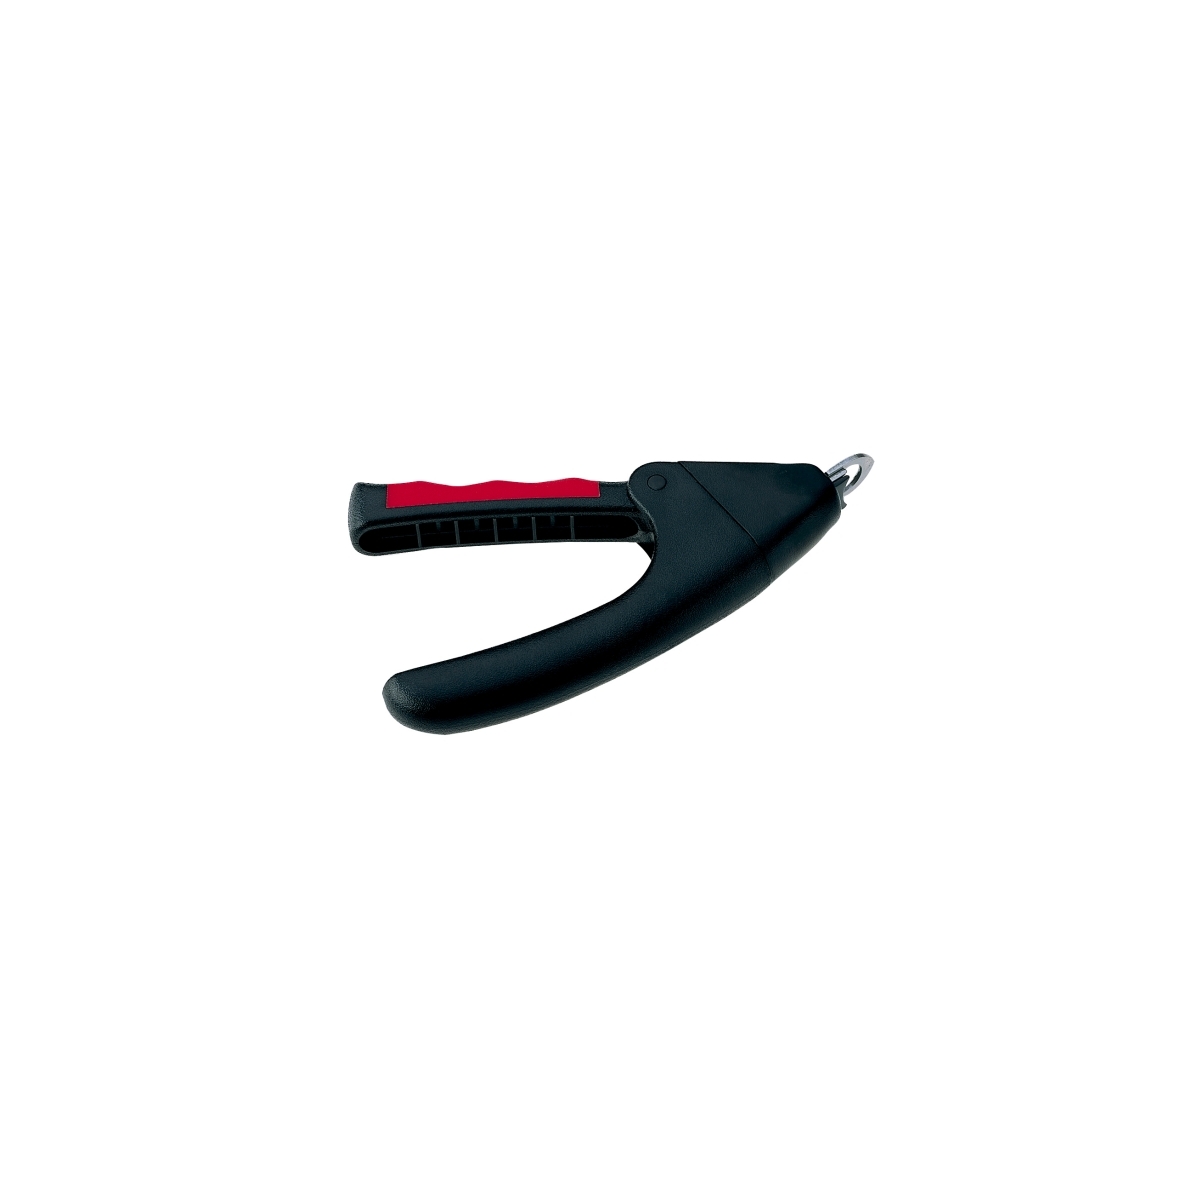 Ferplast ножницы для стрижки когтей/гильотина, 14X8X2см